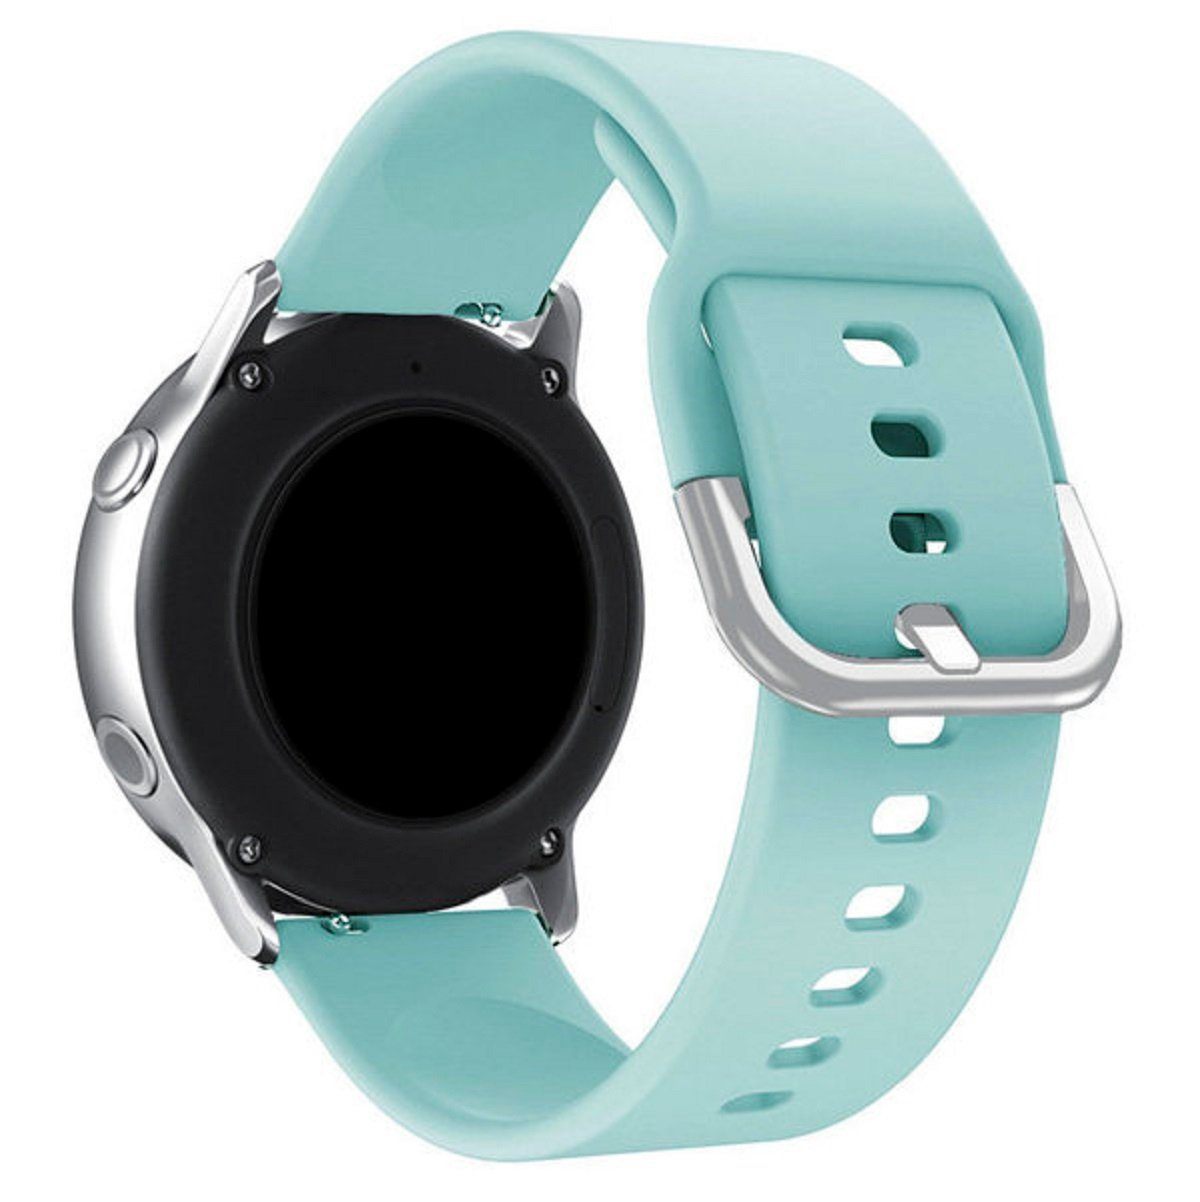 Hurtel Uhrenarmband Silikonarmband Ersatz Smartwatch-Armband universal 22mm Breite Hellblau